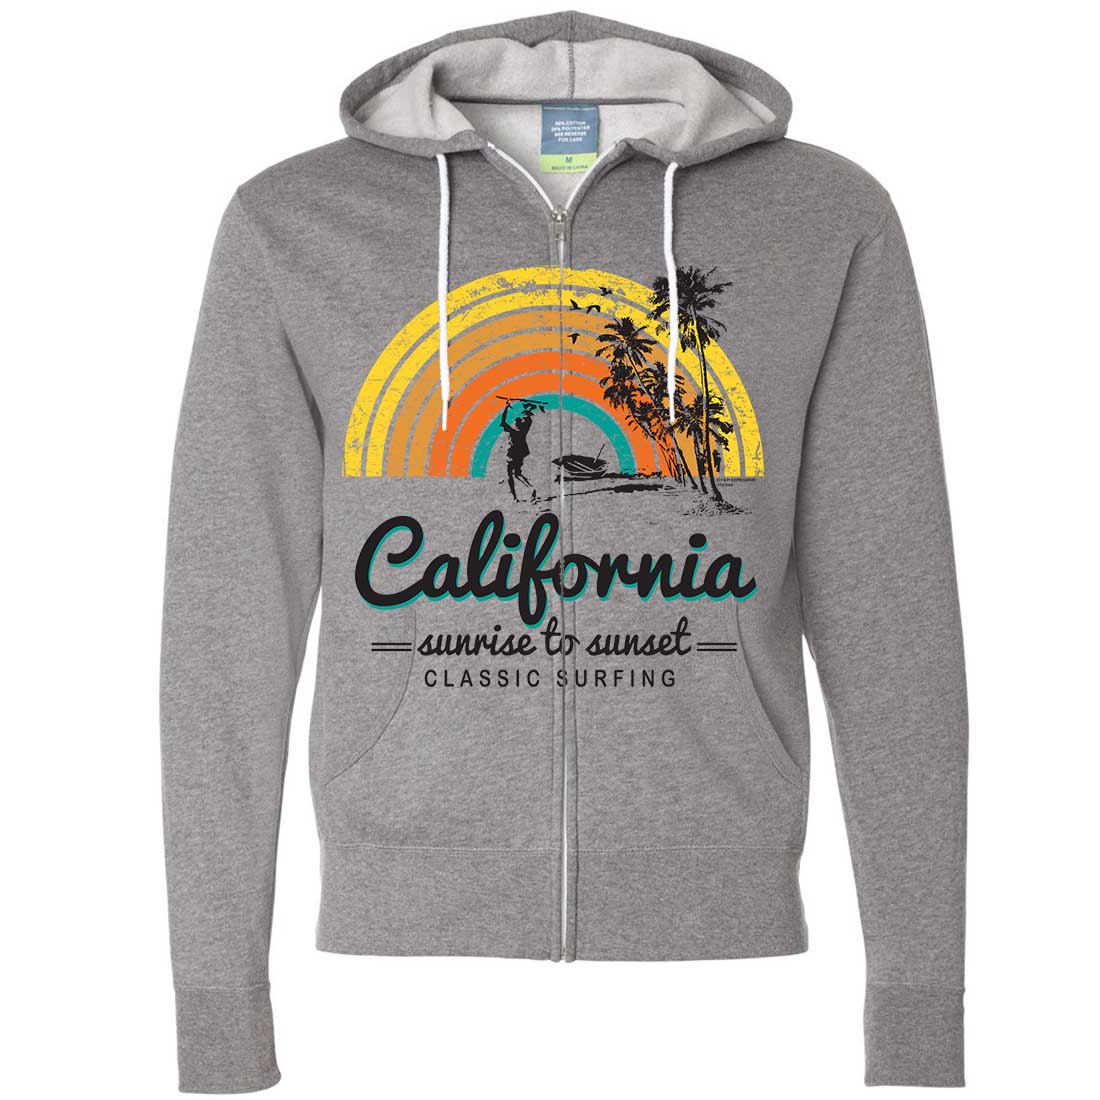 California Classic Sunrise Surfing Zip-Up Hoodie